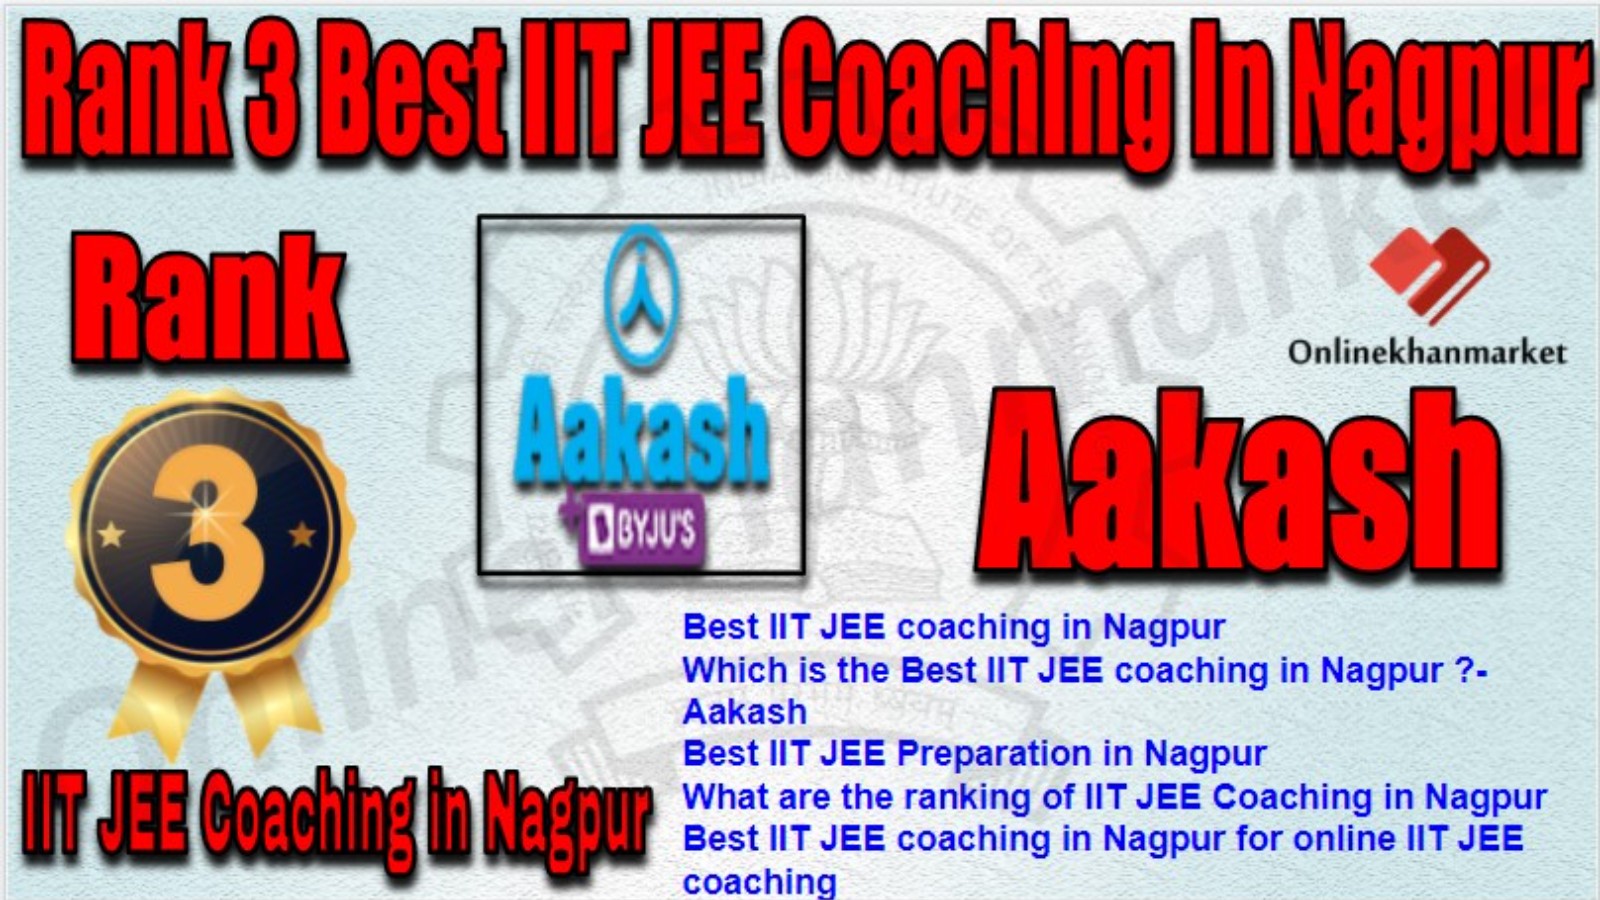 Rank 3 Best IIT JEE Coaching in nagpur